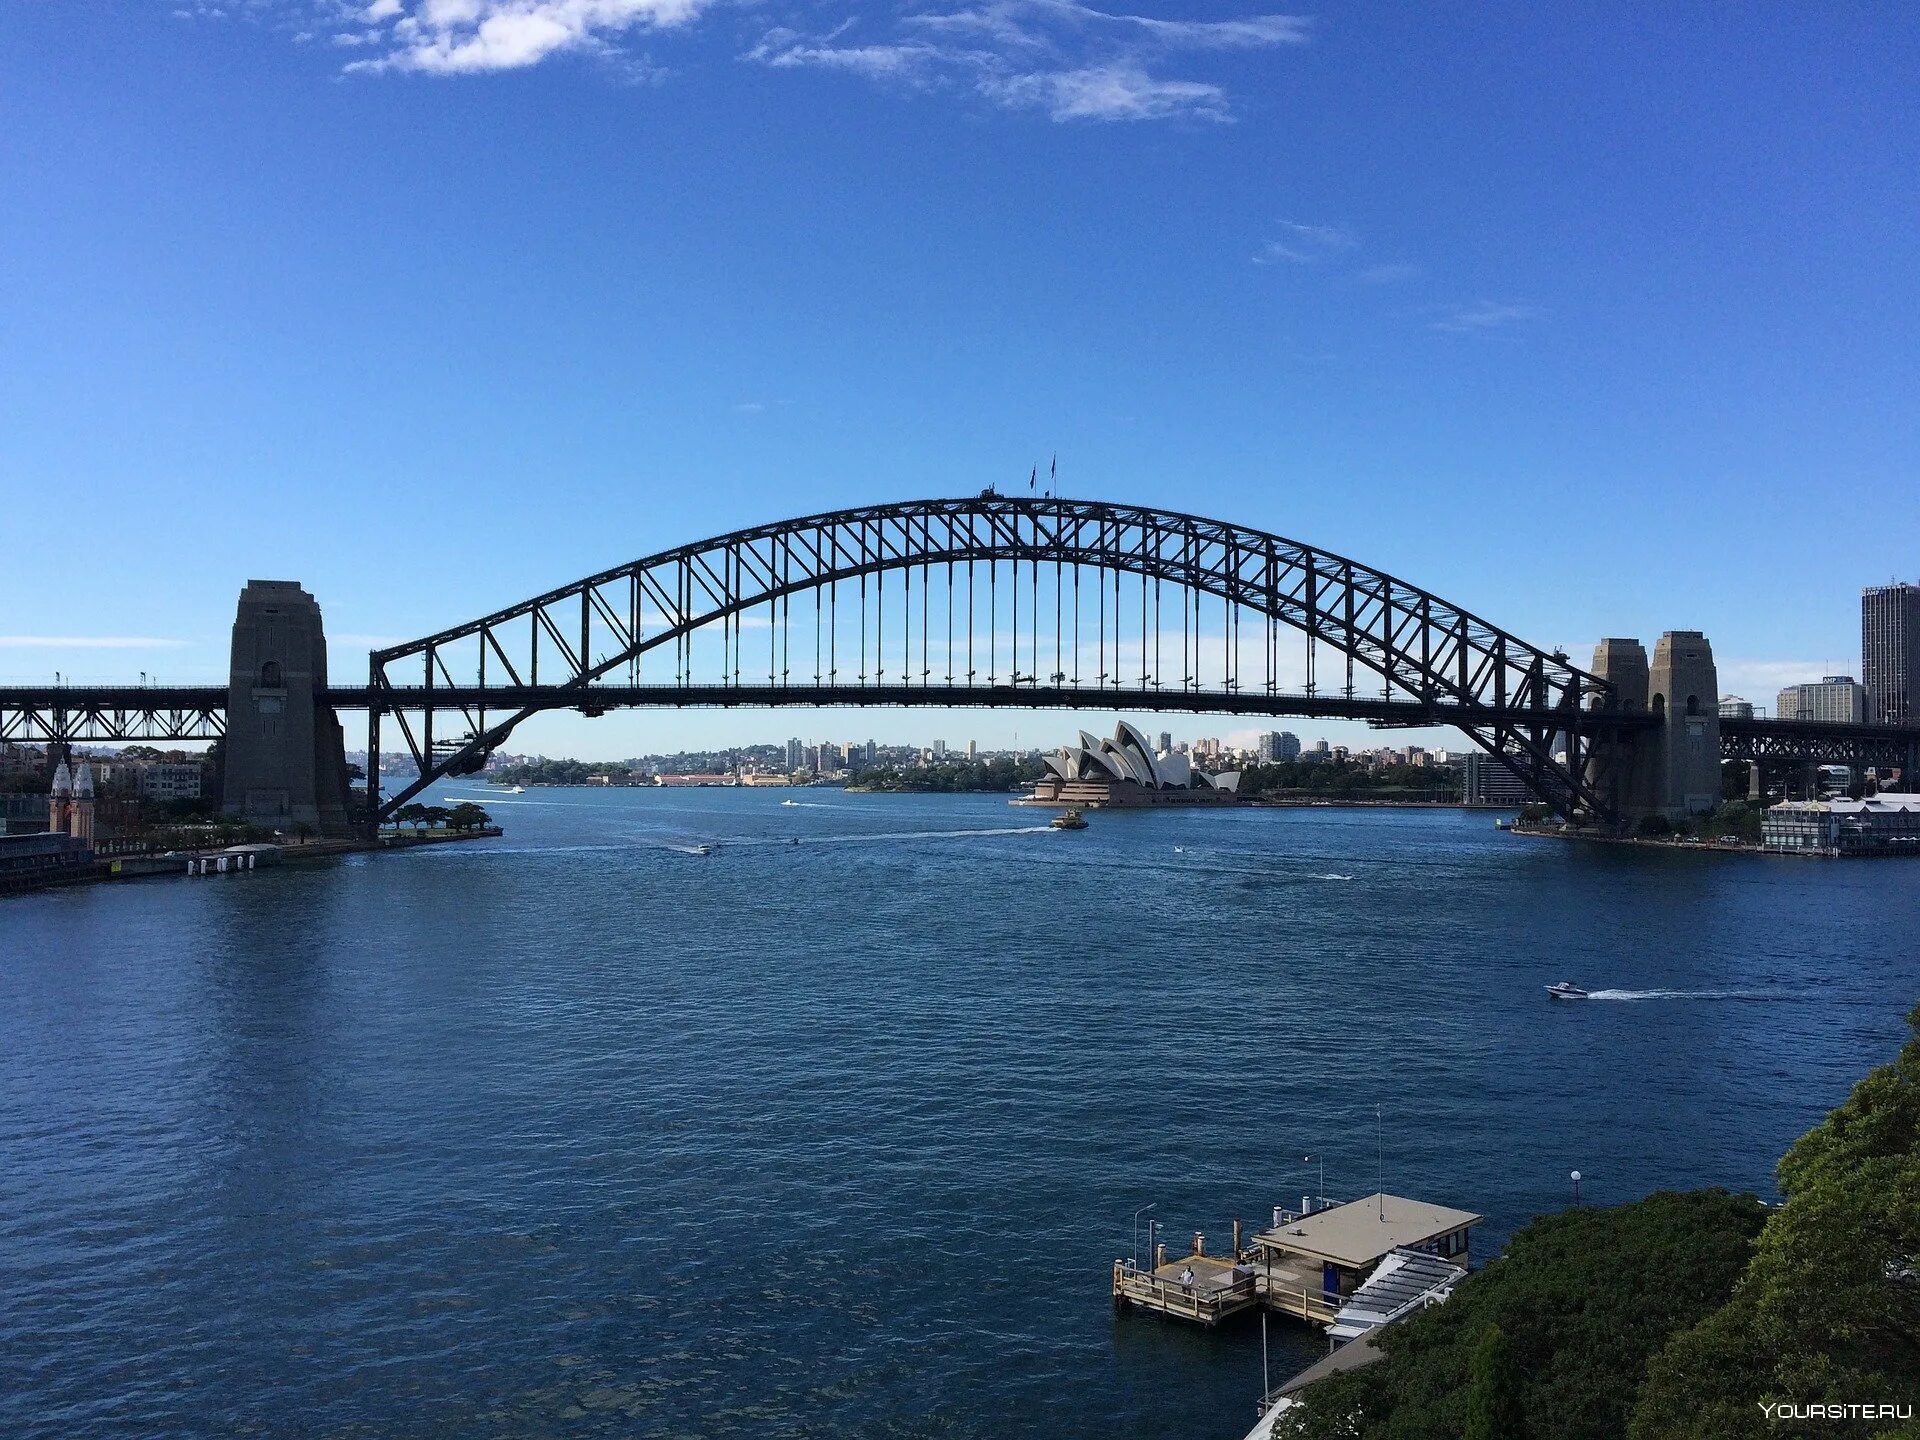 Бридж. Харбор-бридж (Сидней, Австралия). Мост Харбор Сидней. Мост Харбор бридж в Австралии. Мост Харбор-бридж в Сиднее.